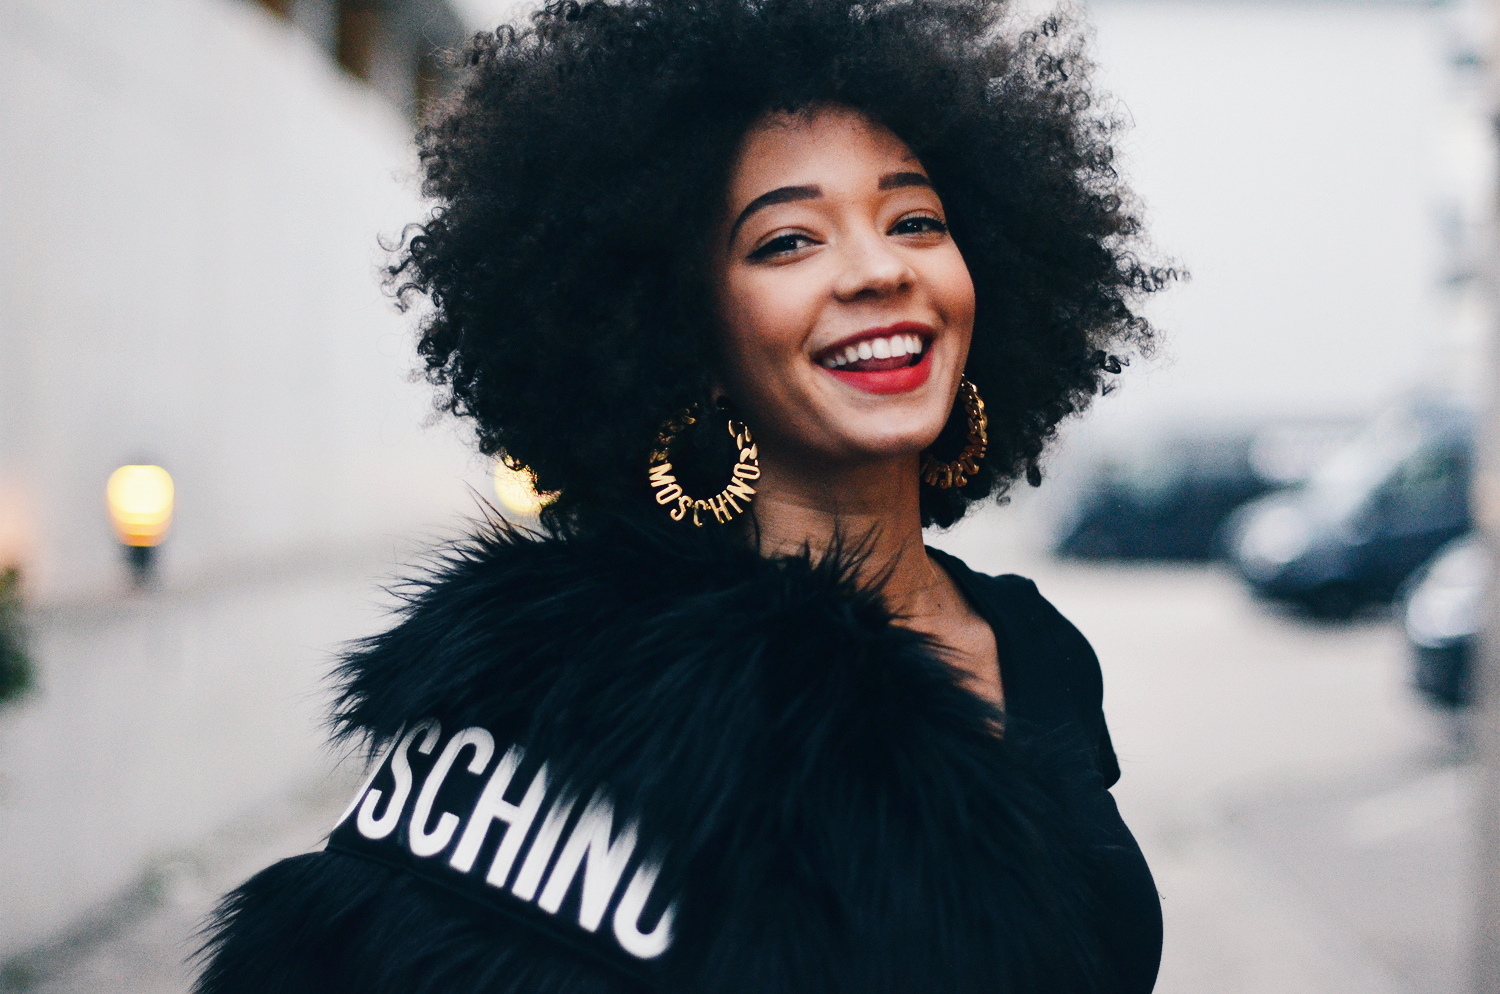 mercredie-blog-mode-fashion-blogger-suisse-geneve-geneva-switzerland-jacket-fur-fake-hm-tv-moschino-collection-afro-natural-curly-hair2